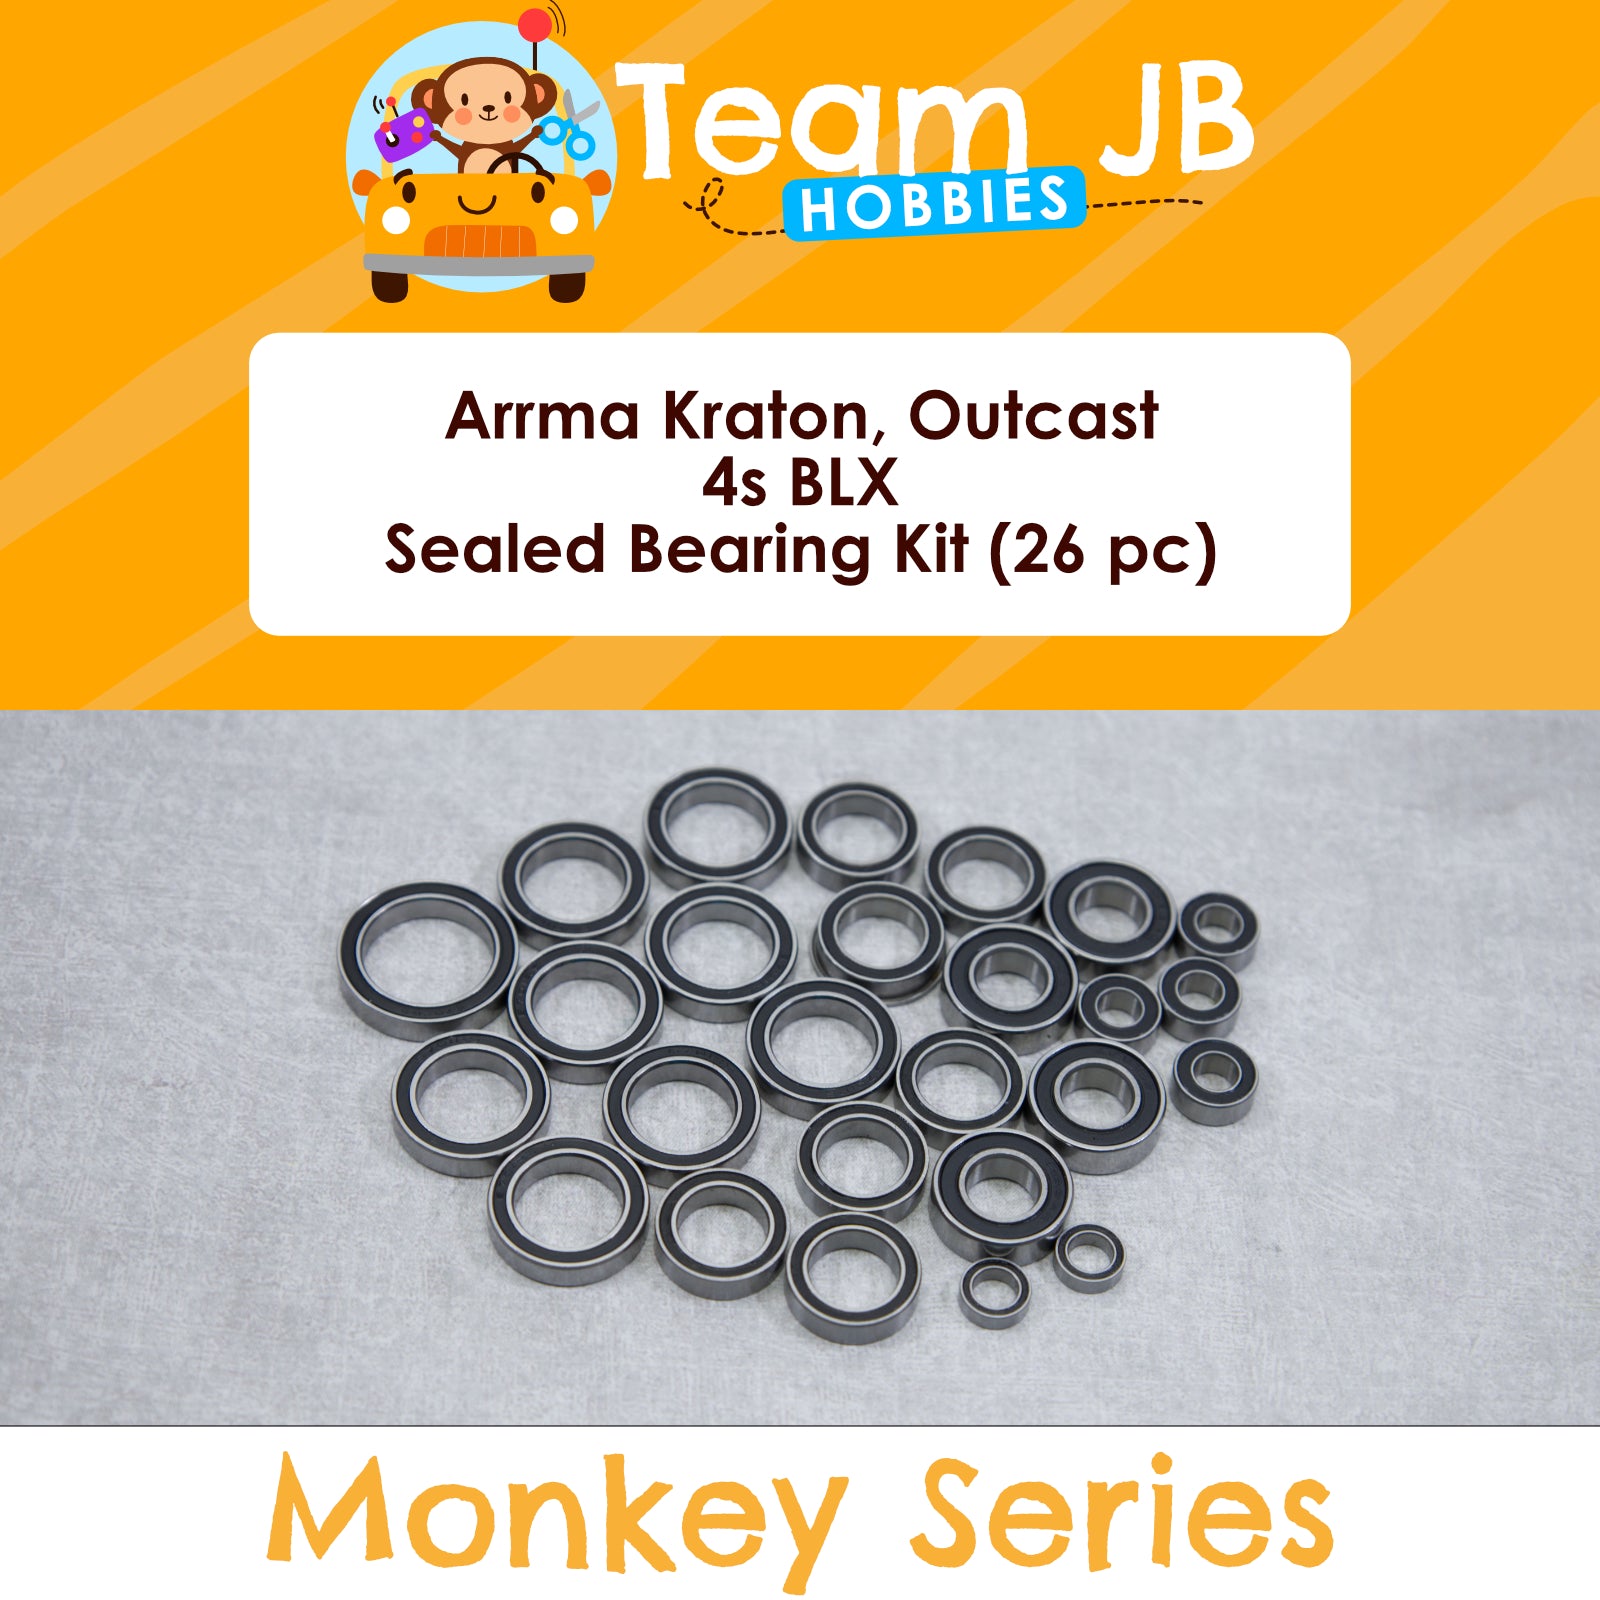 Arrma Kraton, Outcast 4s BLX Sealed Bearing Kit